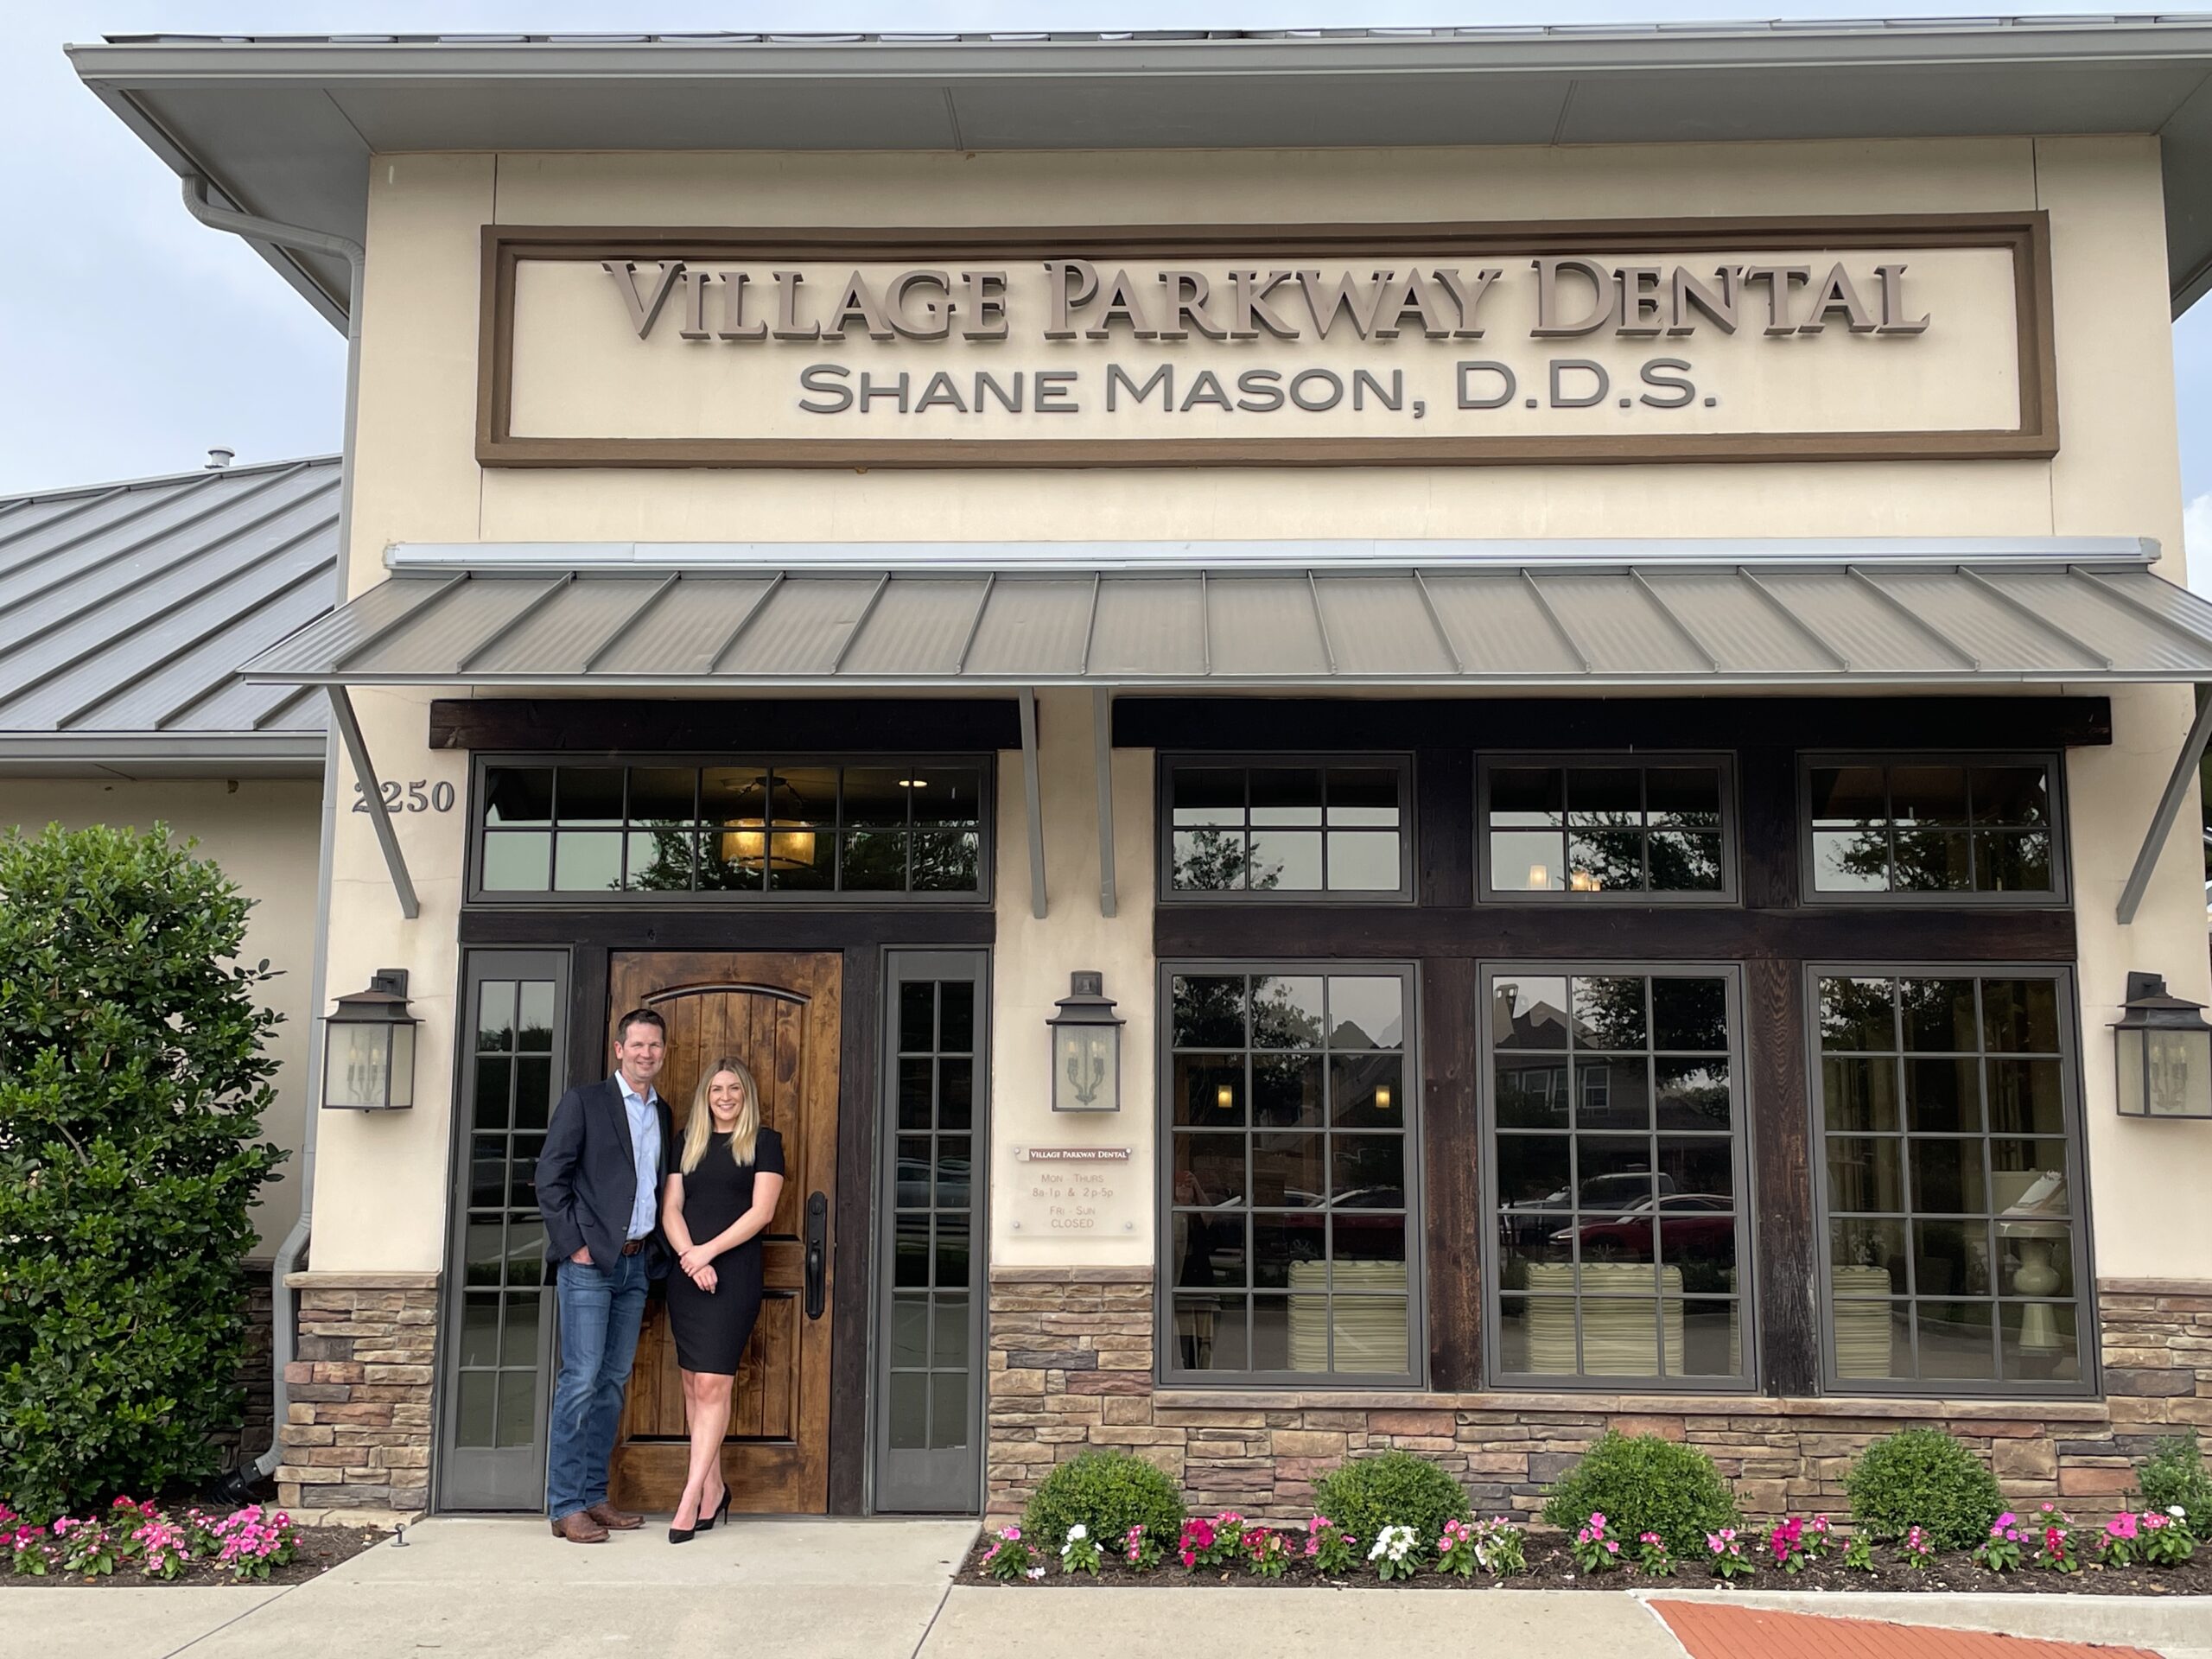 Village Parkway Dental in Highland Village